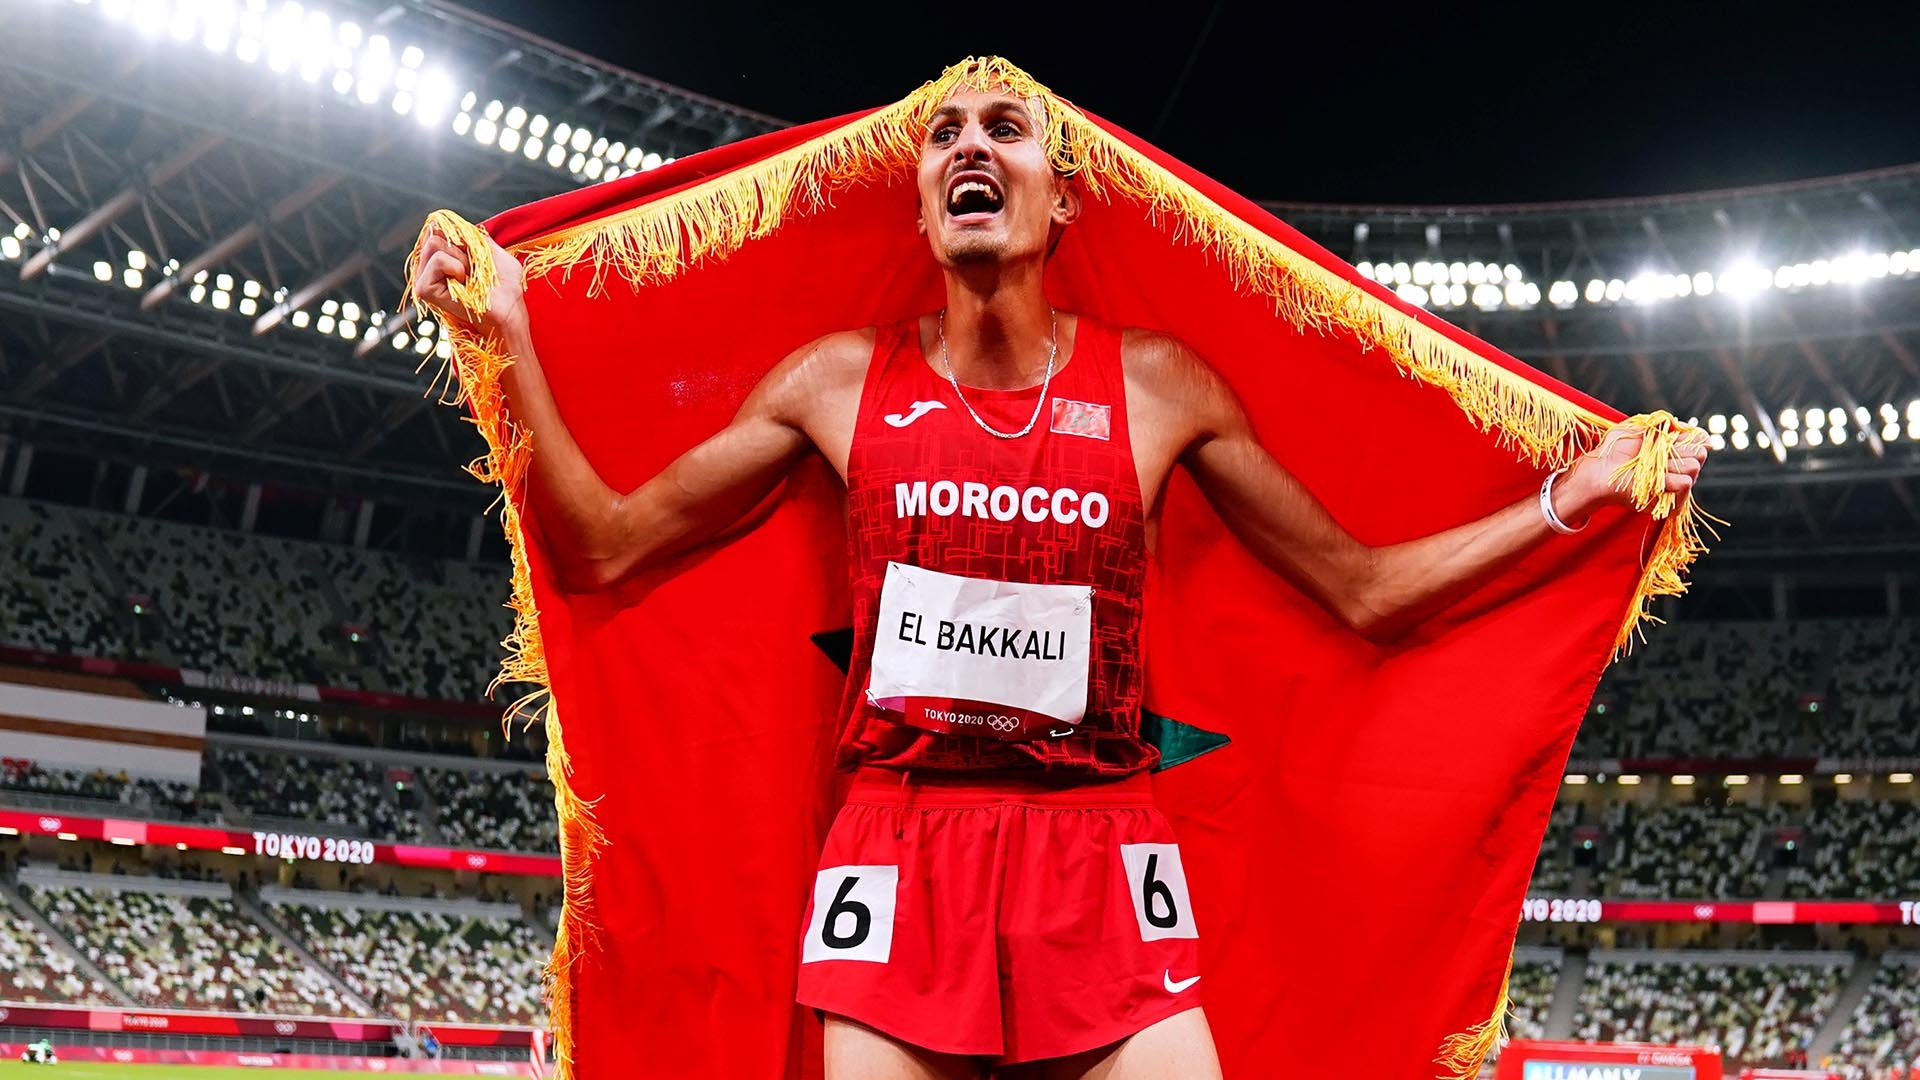 Soufiane El Bakkali, Moroccan athlete, Steeplechase dominance, Kenyan reign, 1920x1080 Full HD Desktop